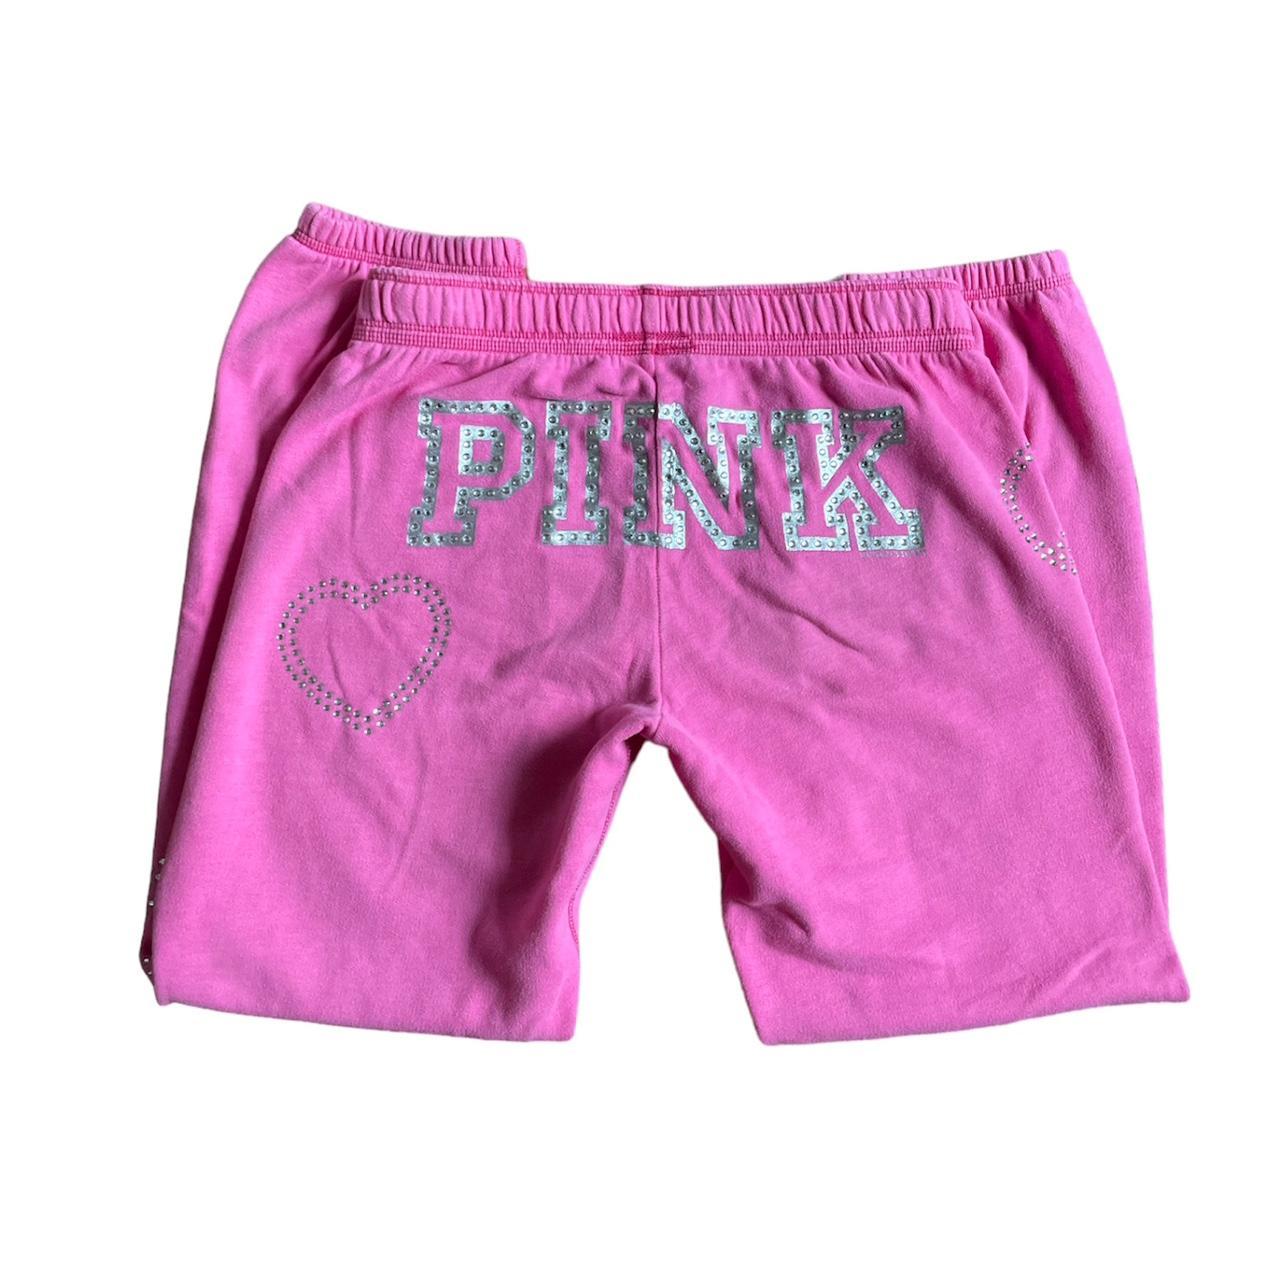 Victoria's secret Pink sweatpants, Size xs, brand - Depop